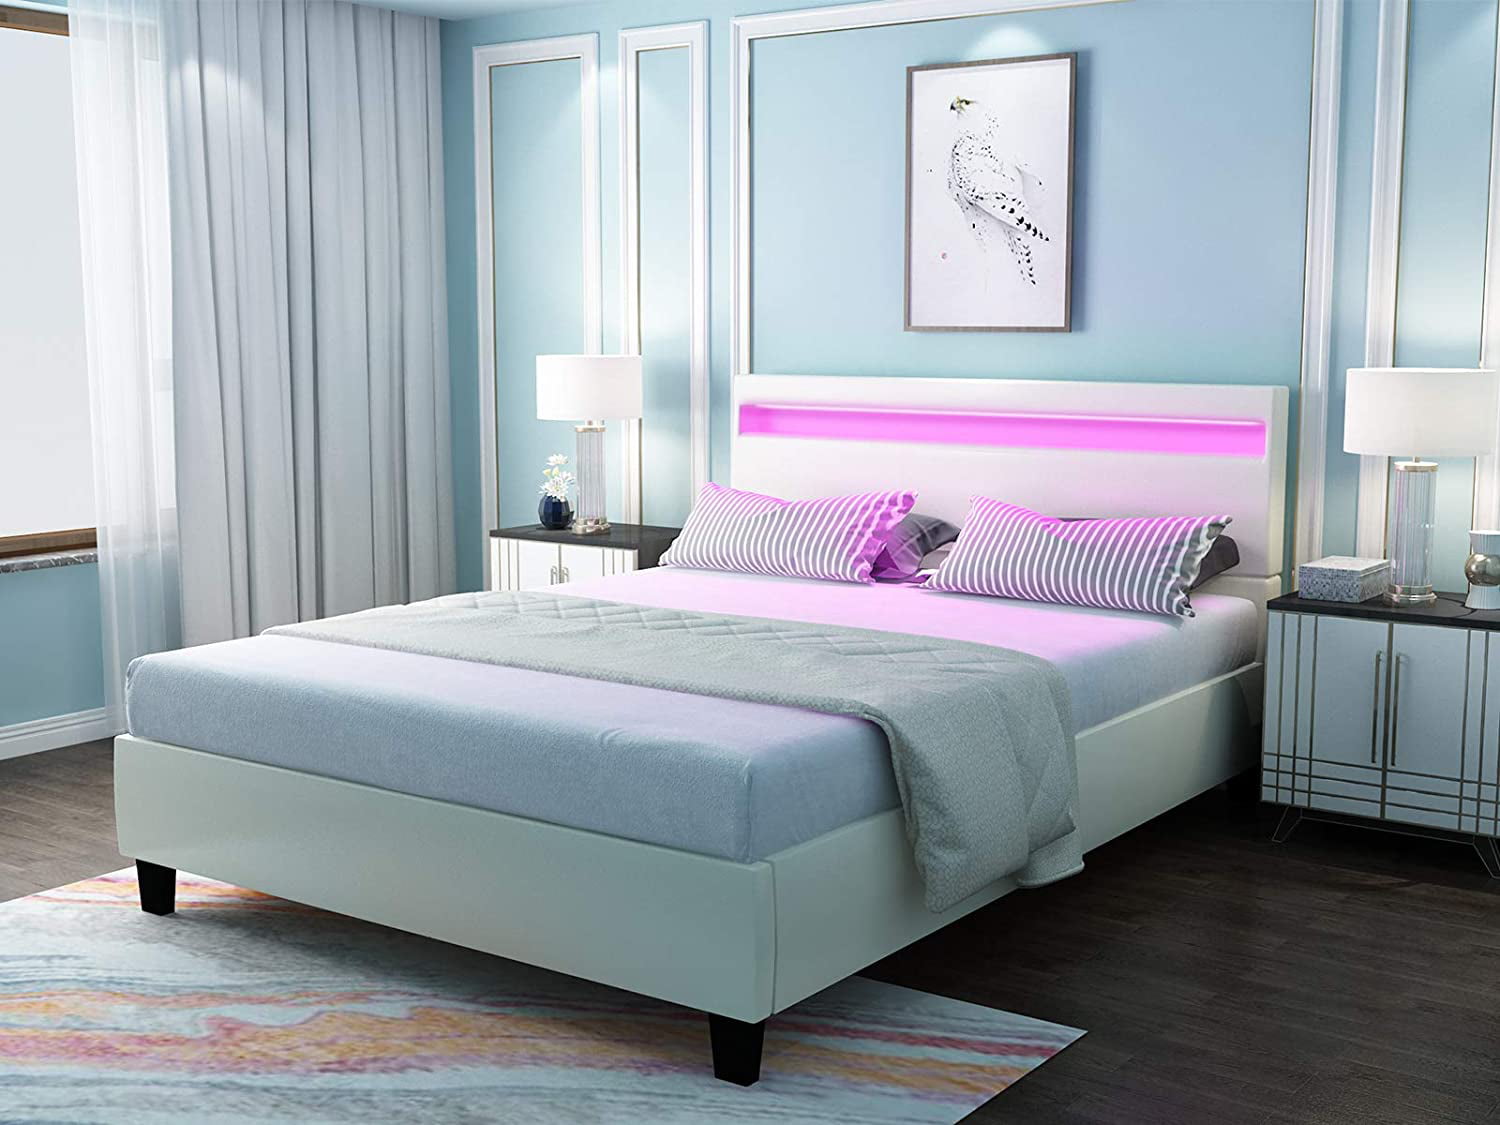 Modern Upholstered Faux Leather Platform Bed mecor Full Size LED Bed Frame Black//Full No Box Spring Needed 8 Color Changing LED Lights in Headboard